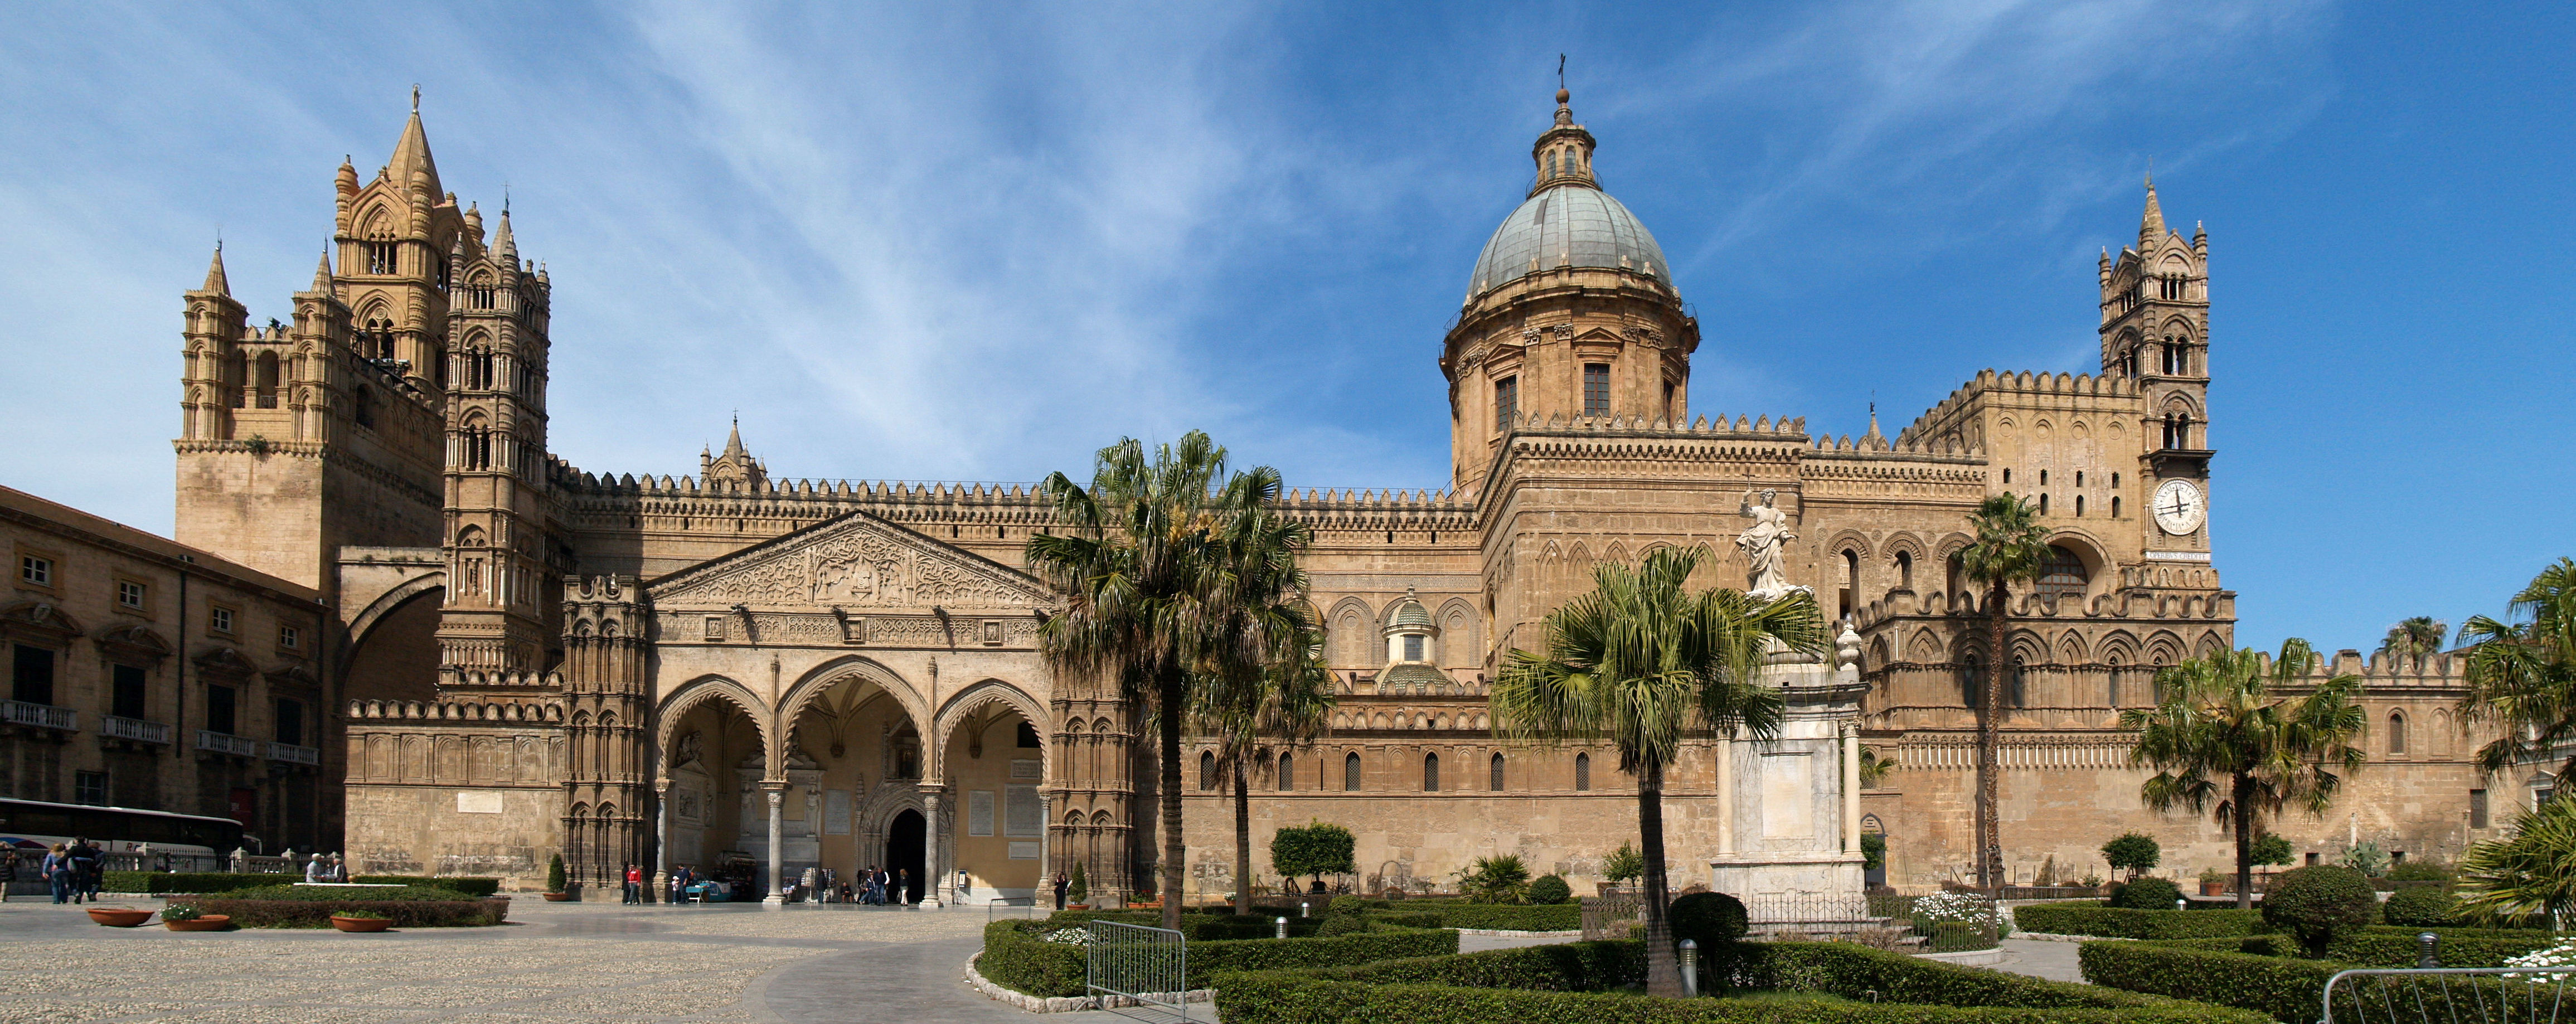 File:Panoramica Cattedrale di Palermo.jpg - Wikimedia Commons